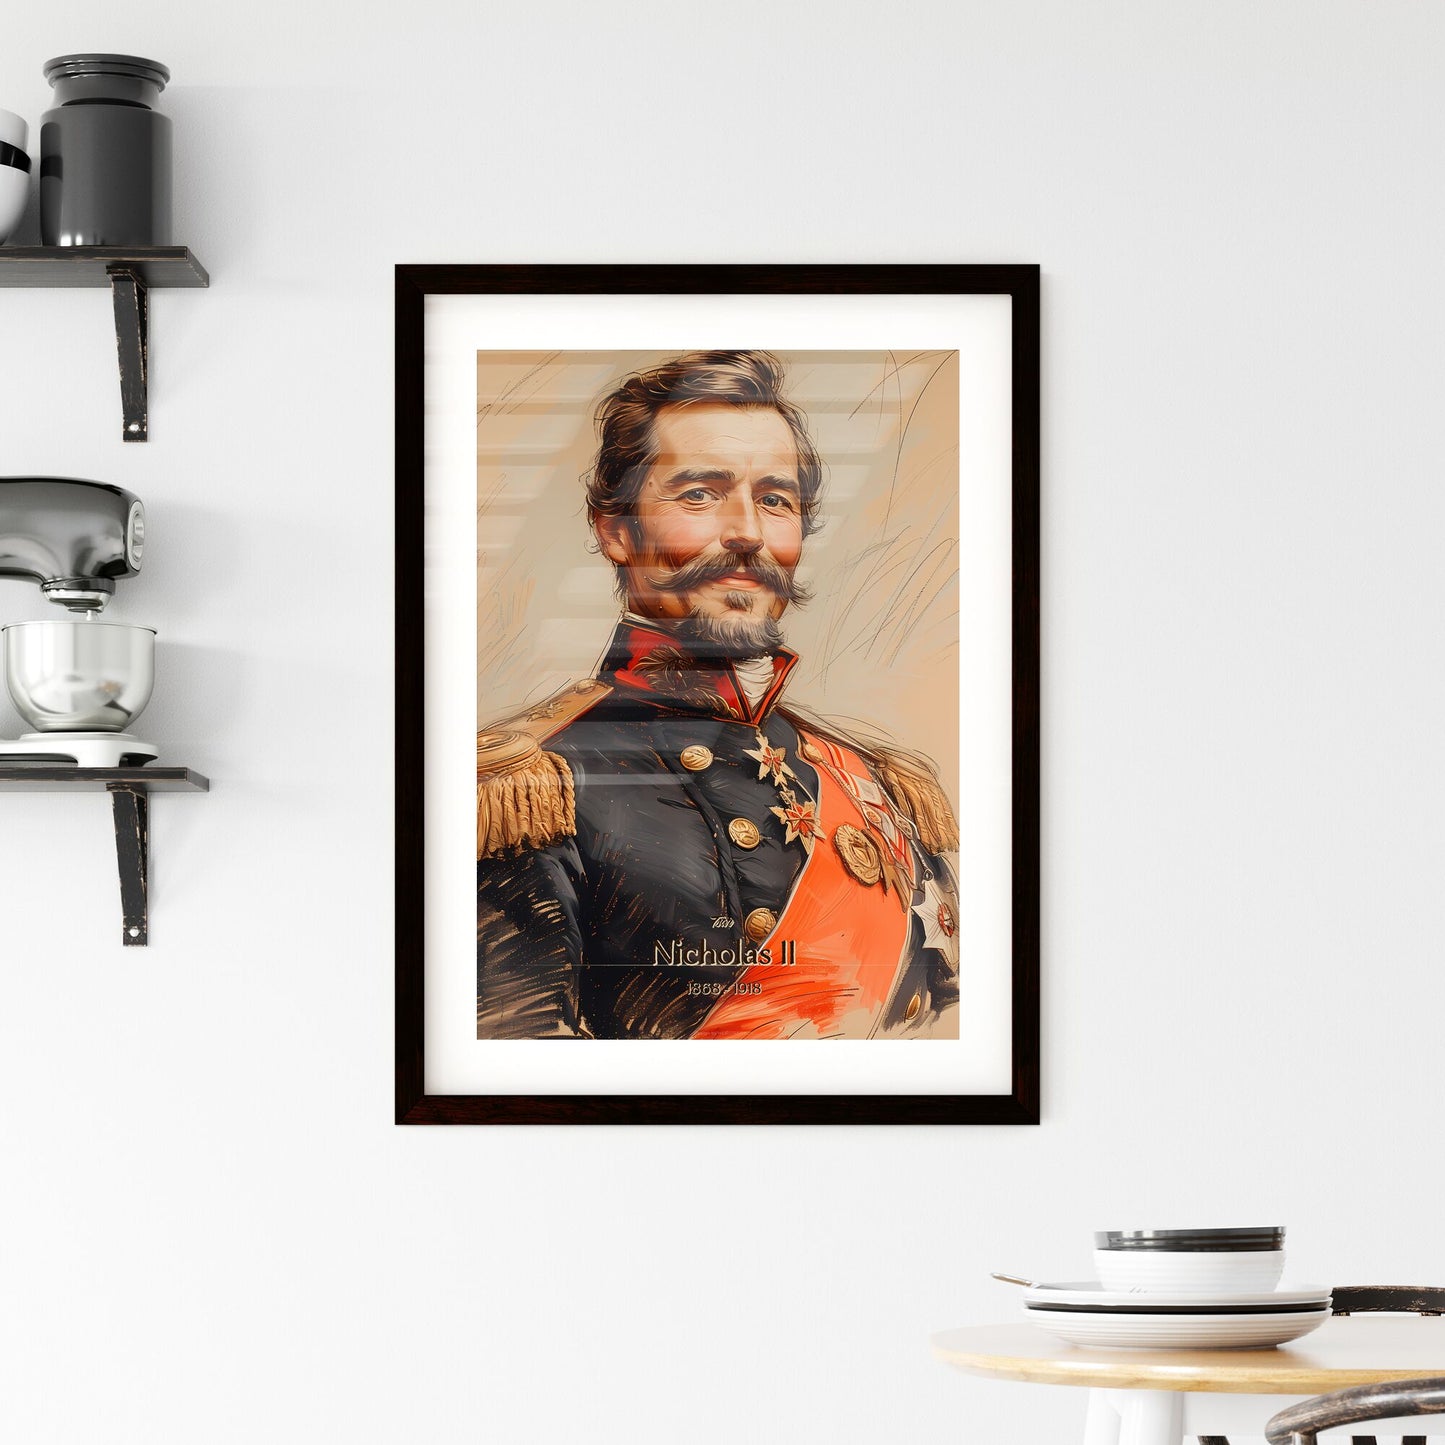 Tsar, Nicholas II, 1868 - 1918, A Poster of a man in a military uniform Default Title